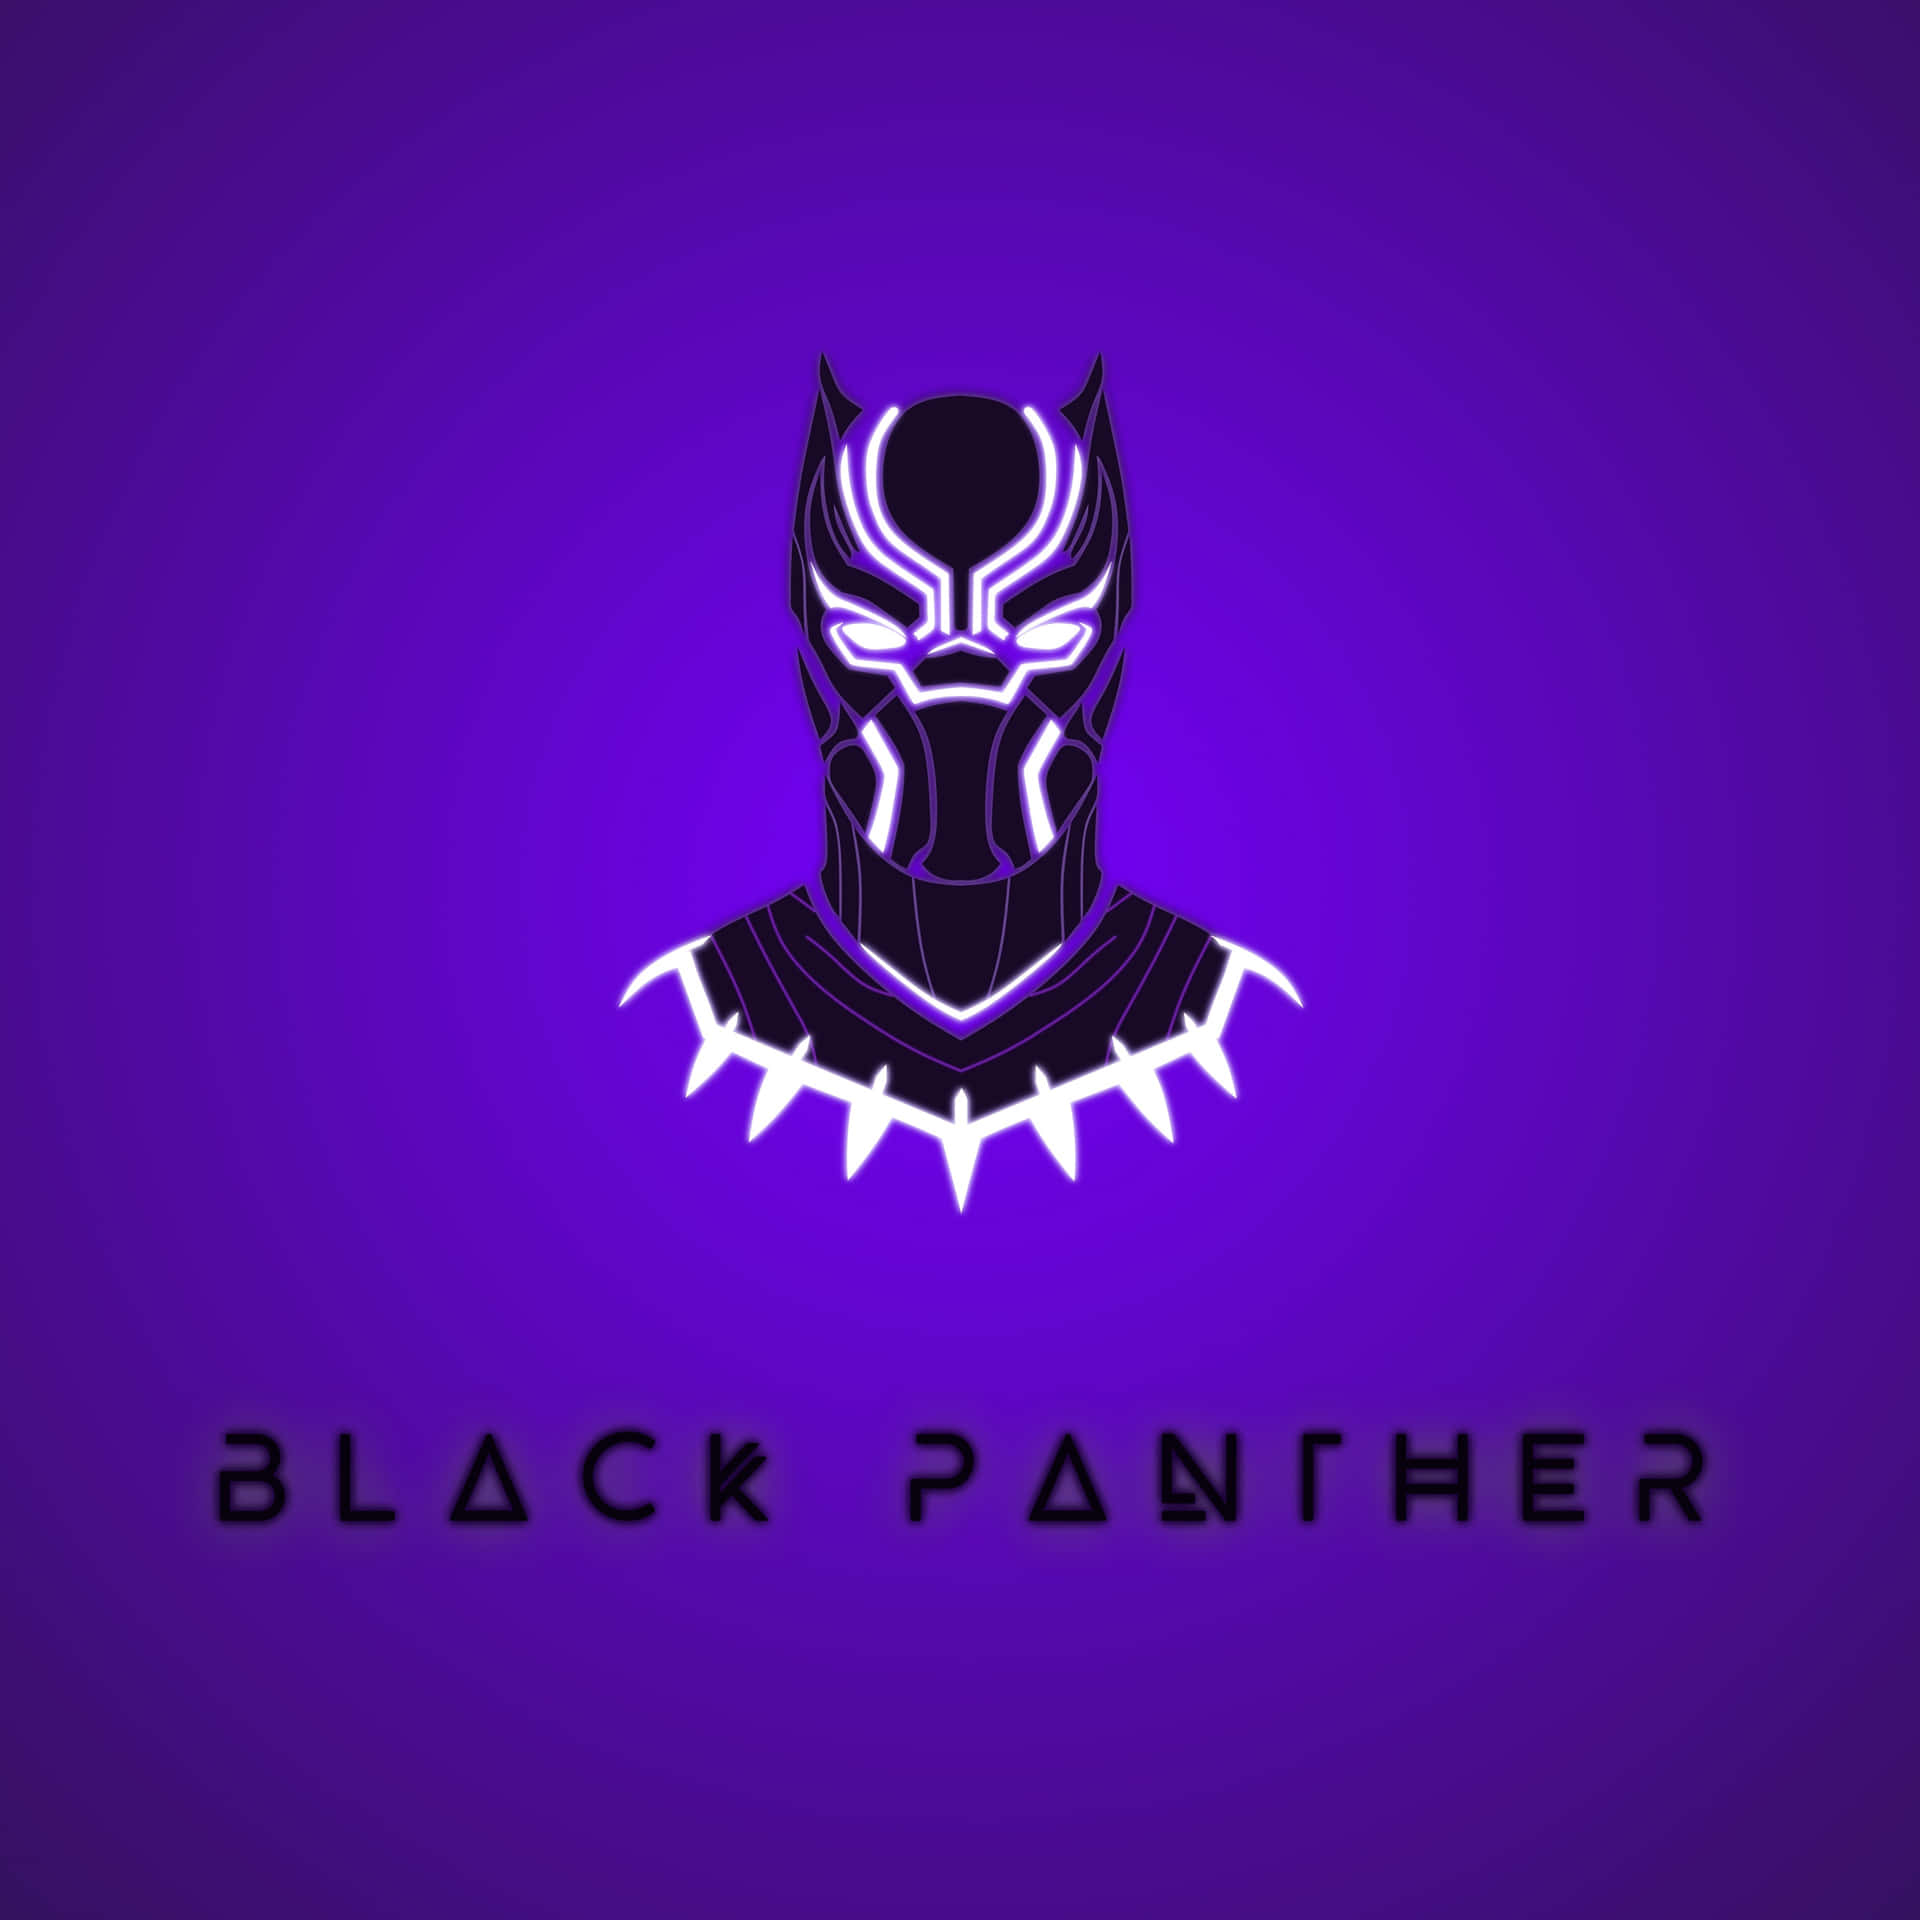 Black Panther Logo On Purple Background Wallpaper